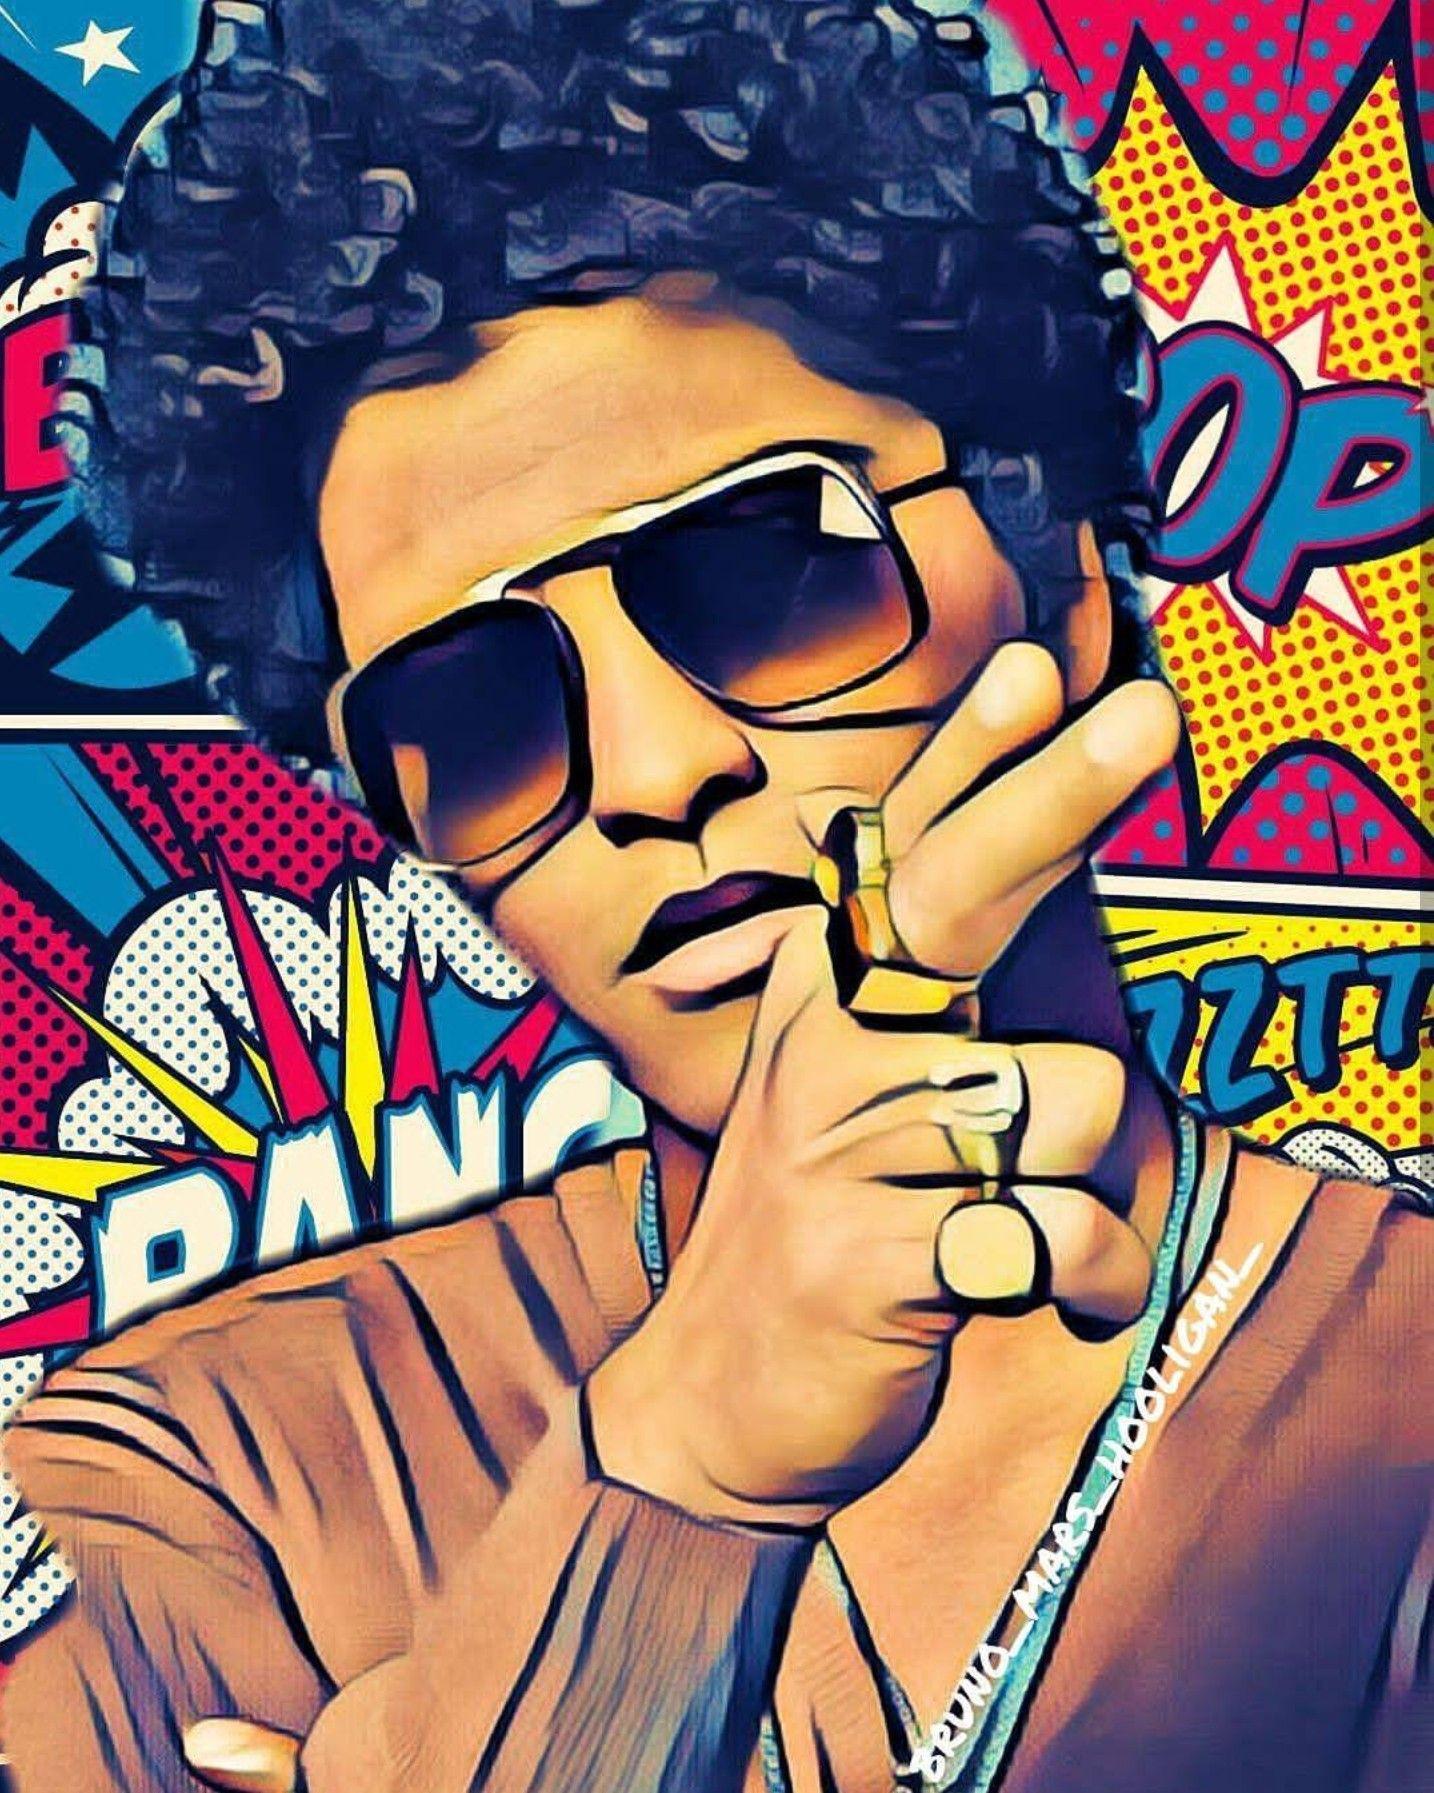 A cartoon image of a man with sunglasses smoking a cigarette - Bruno Mars